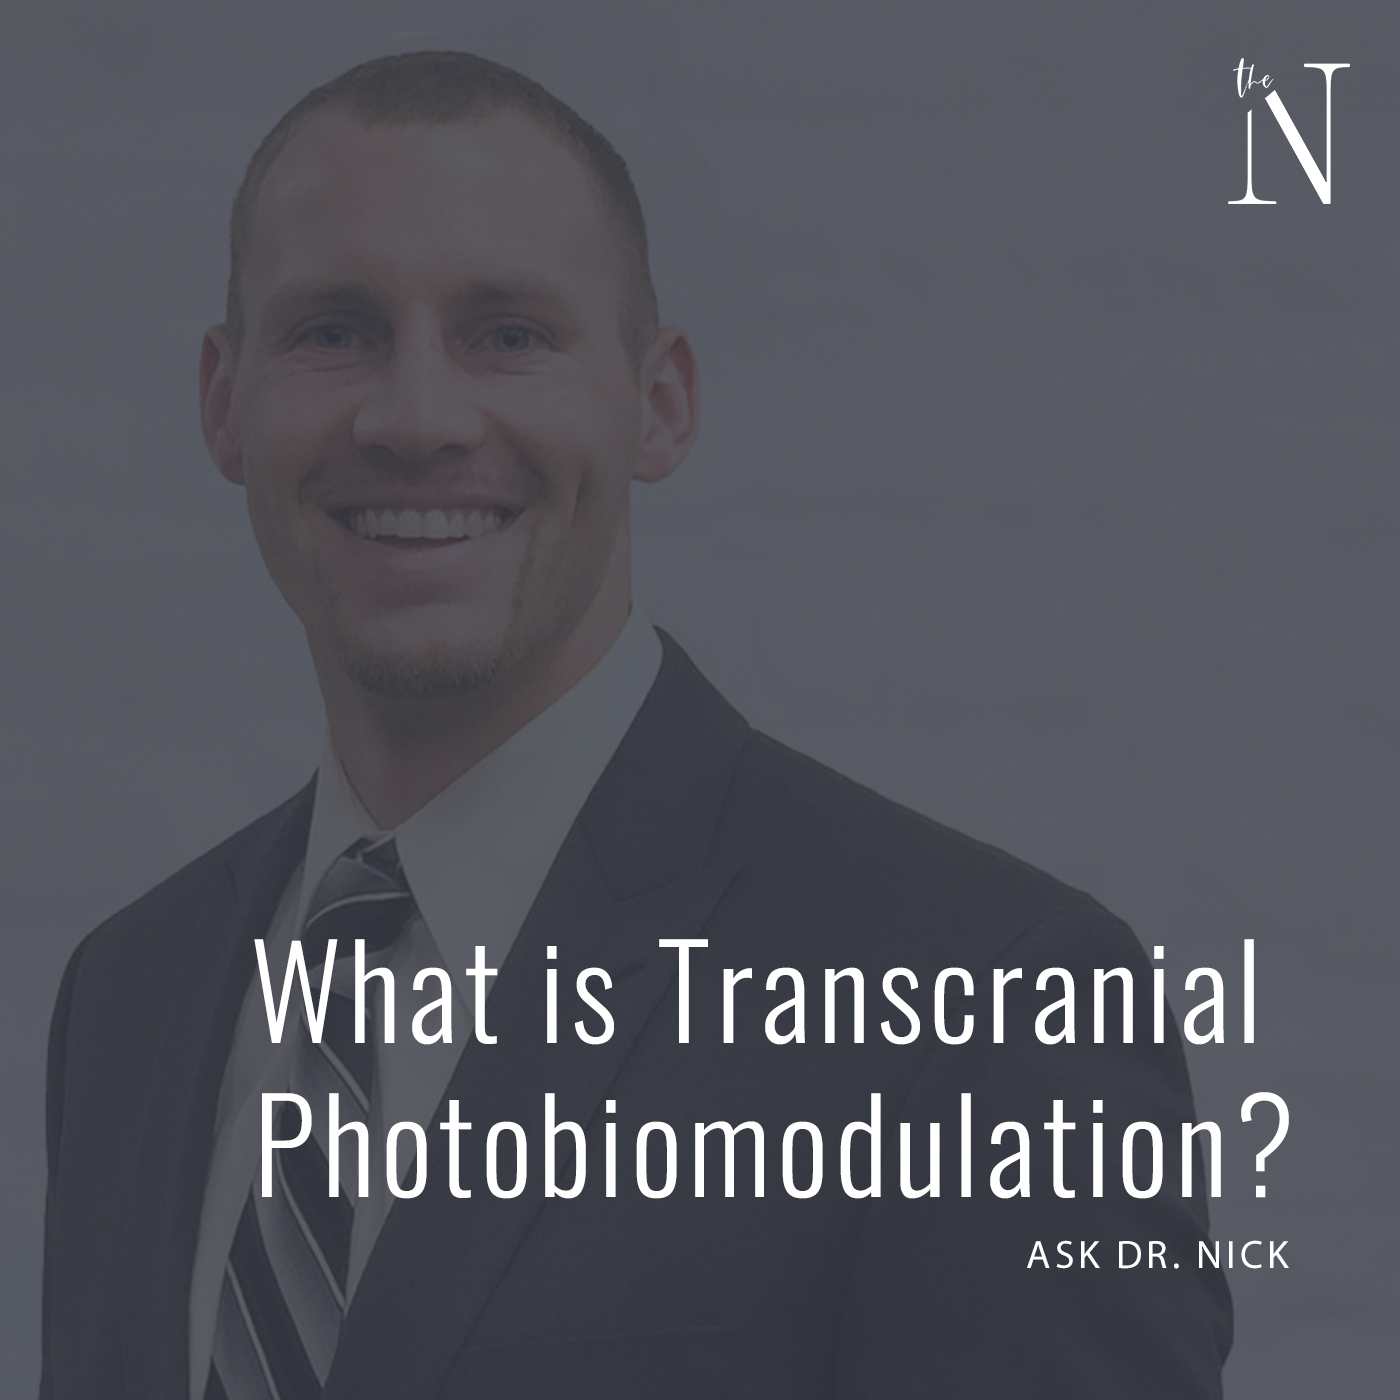 What is Transcranial Photobiomodulation?